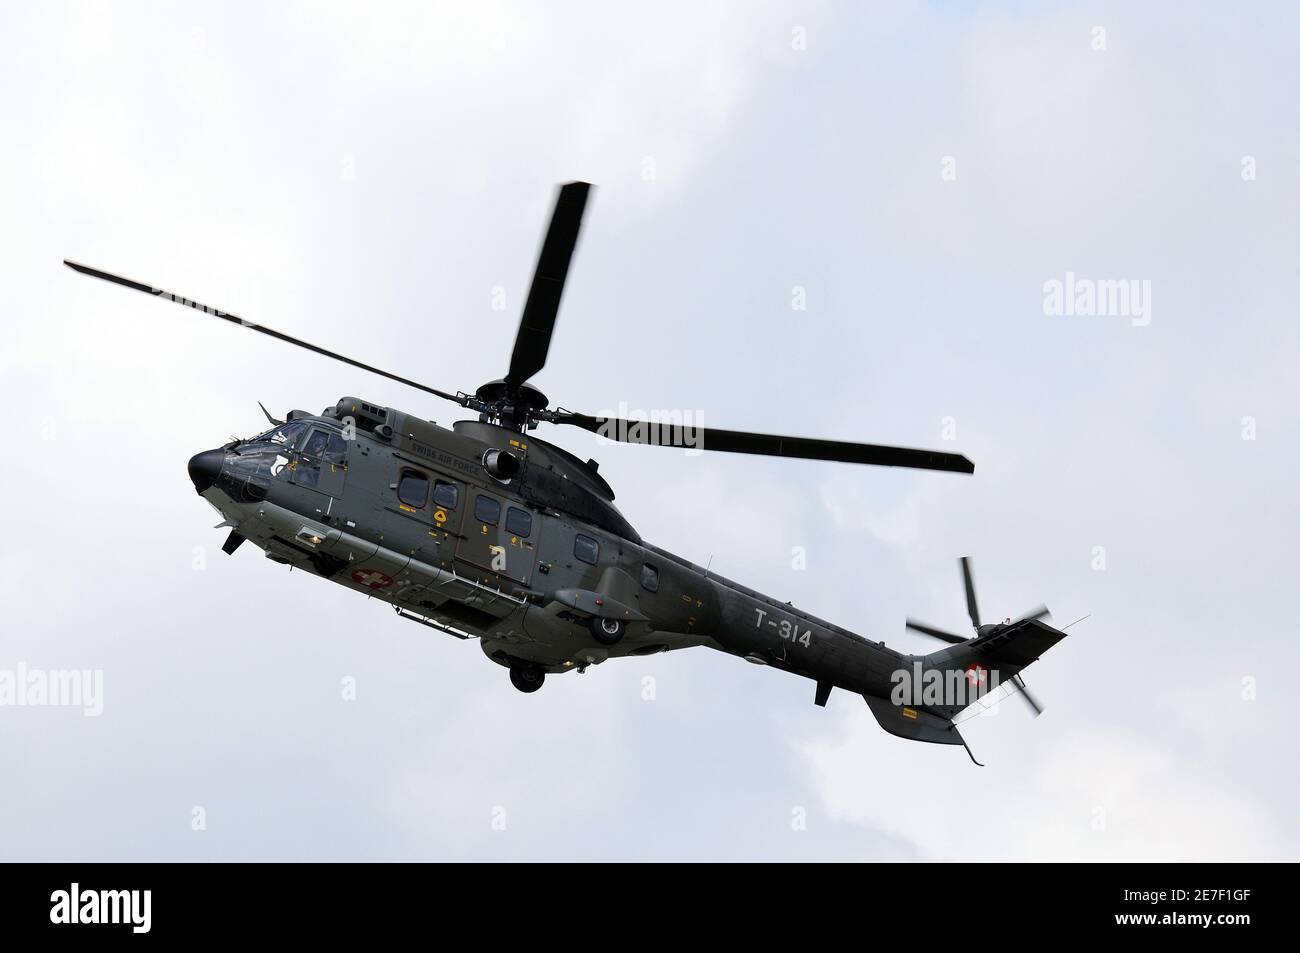 Forza aerea svizzera "Super Puma Foto stock - Alamy